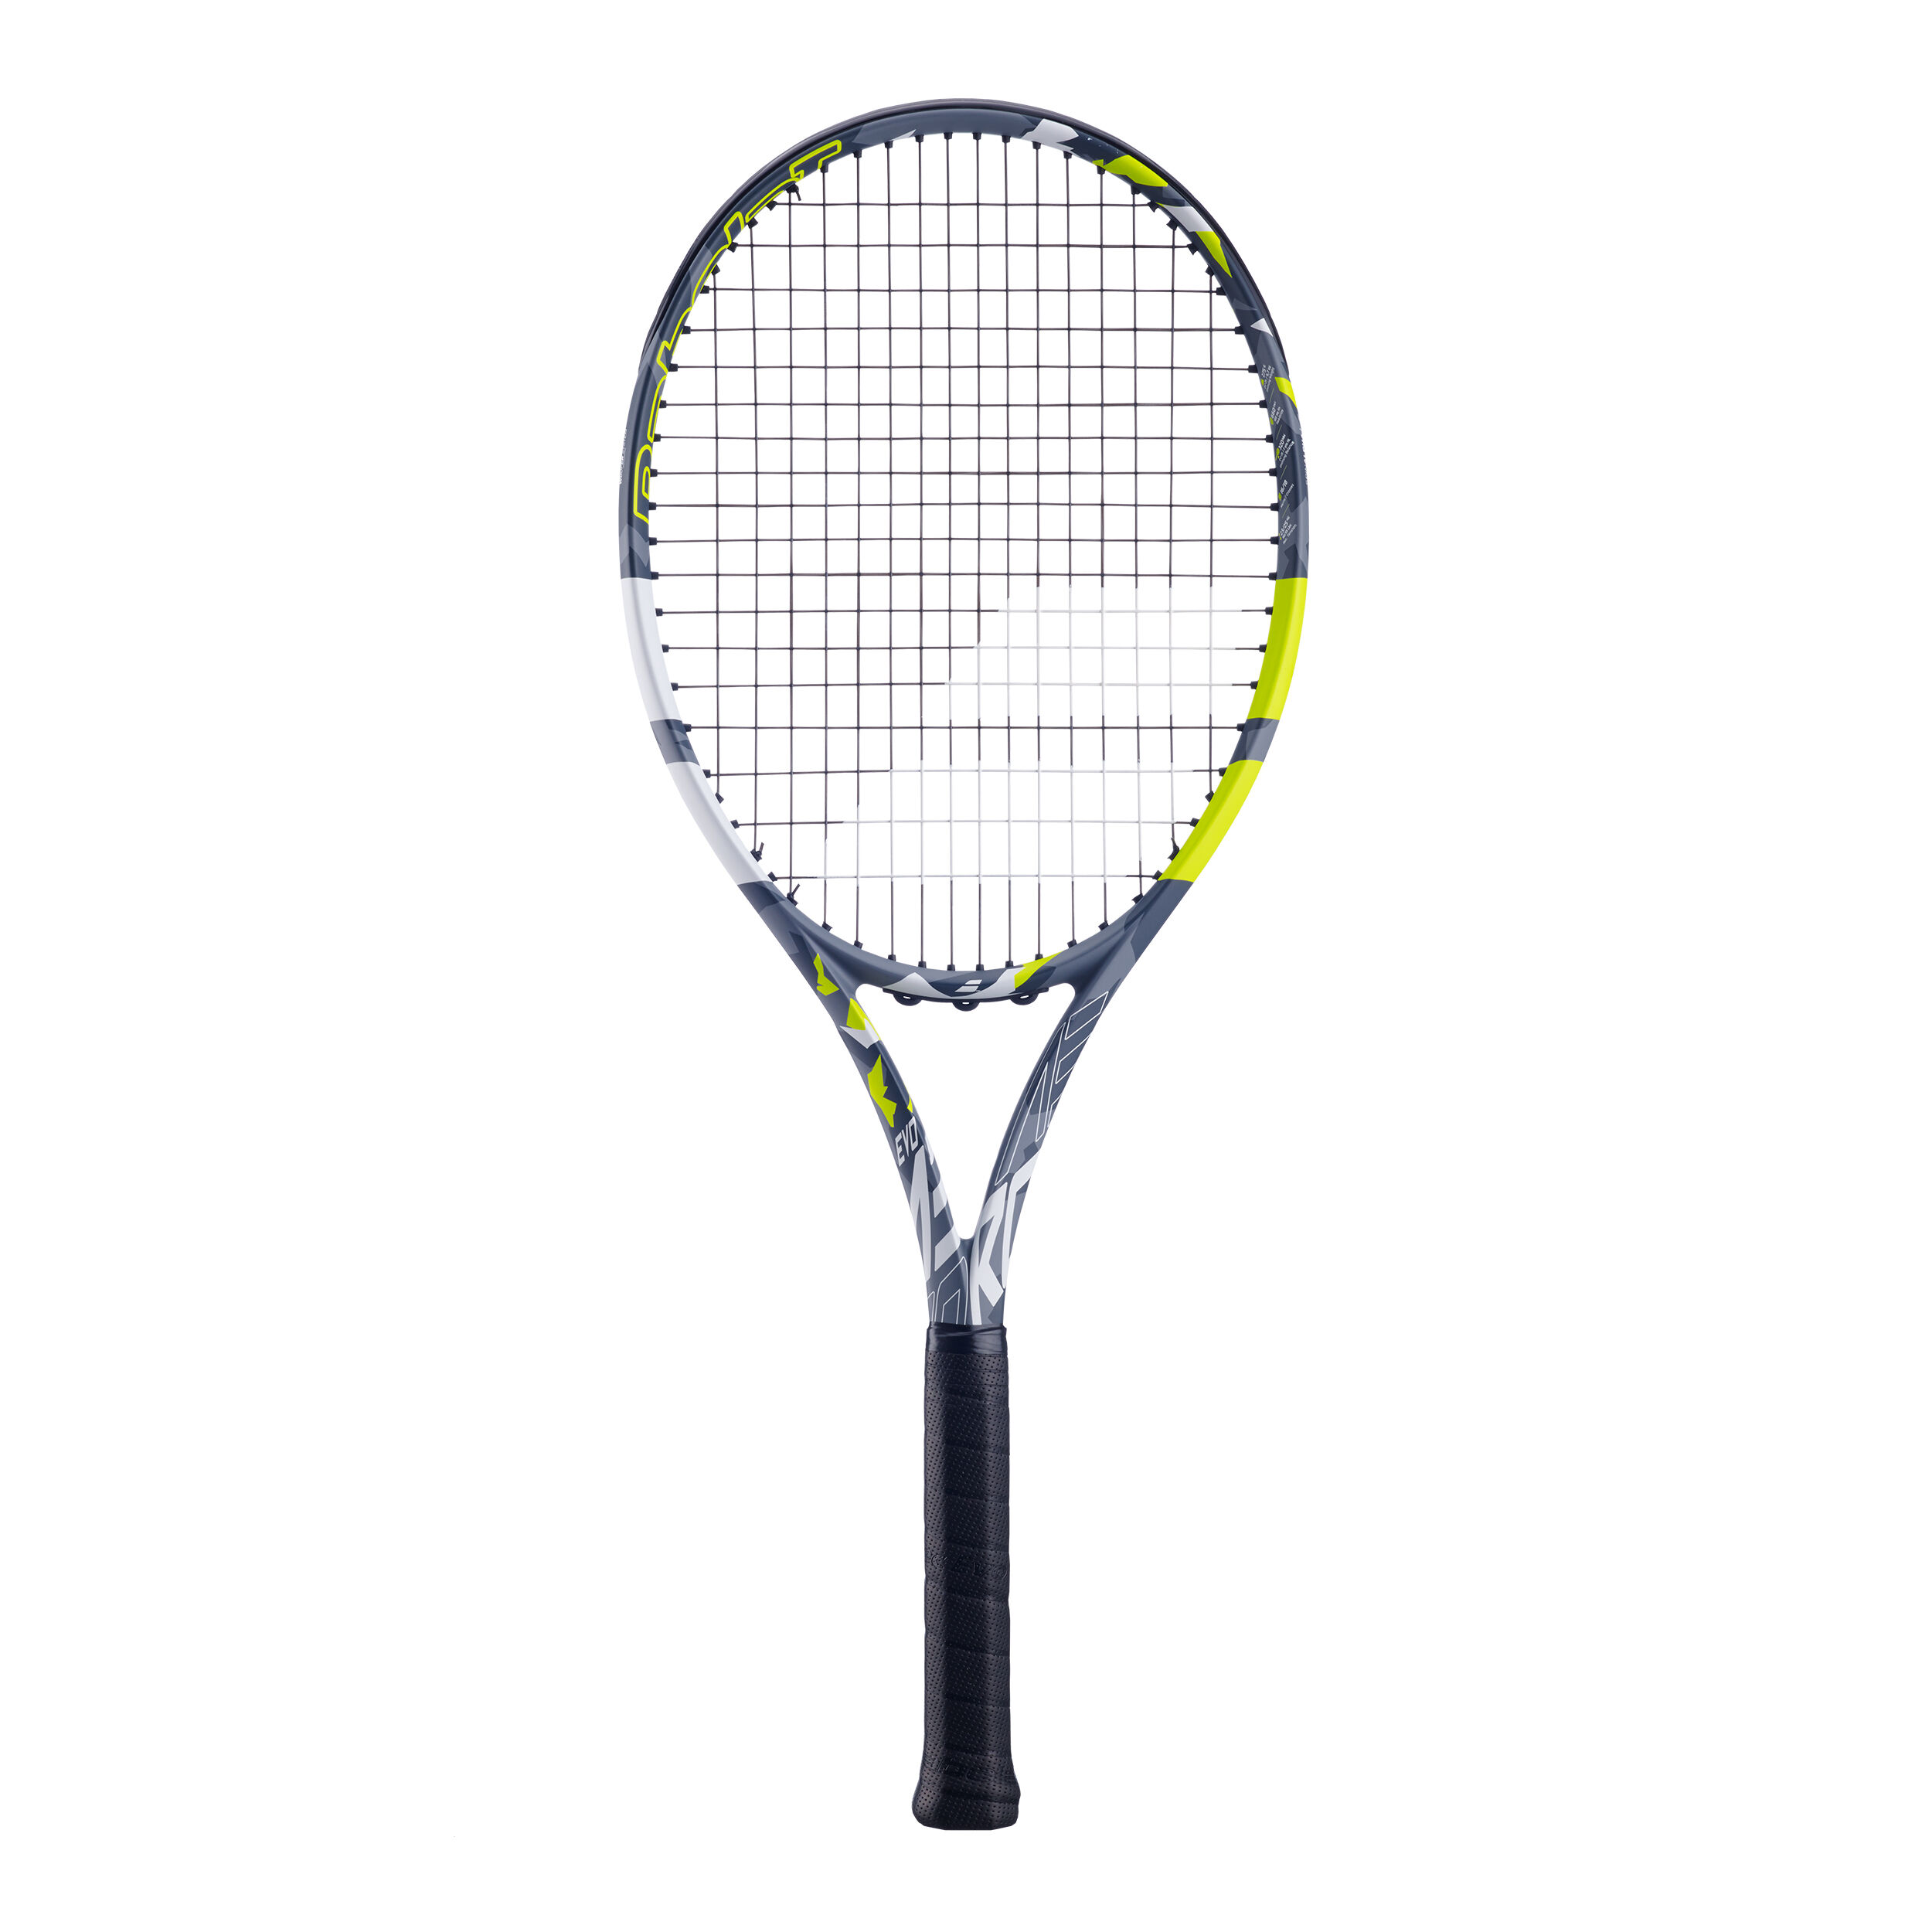 Buy Babolat Evo Aero online | Tennis Point COM